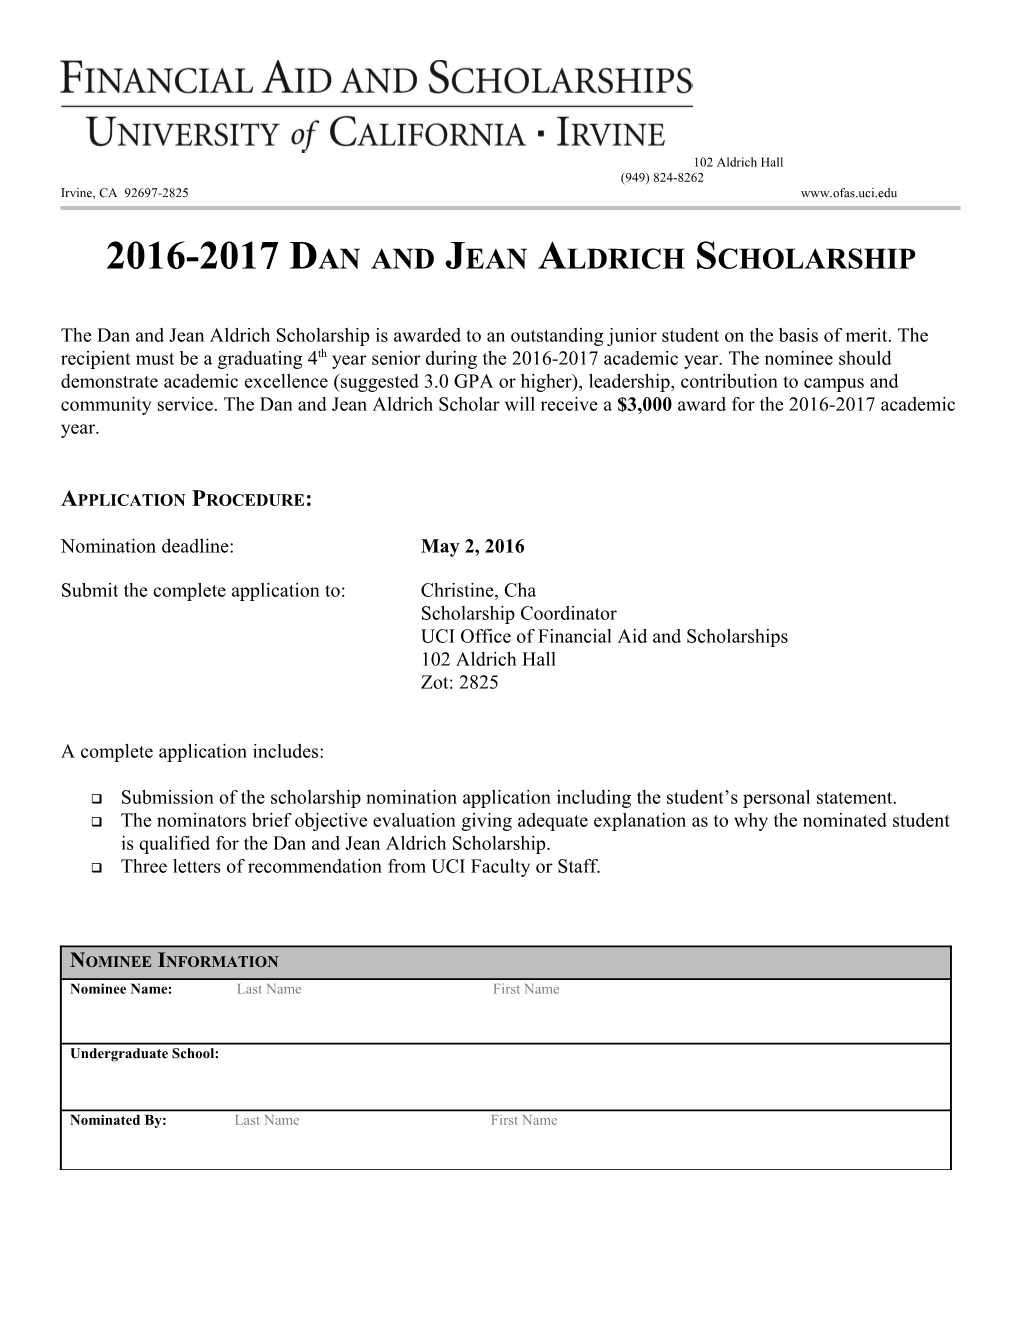 2016-2017 Dan and Jean Aldrich Scholarship